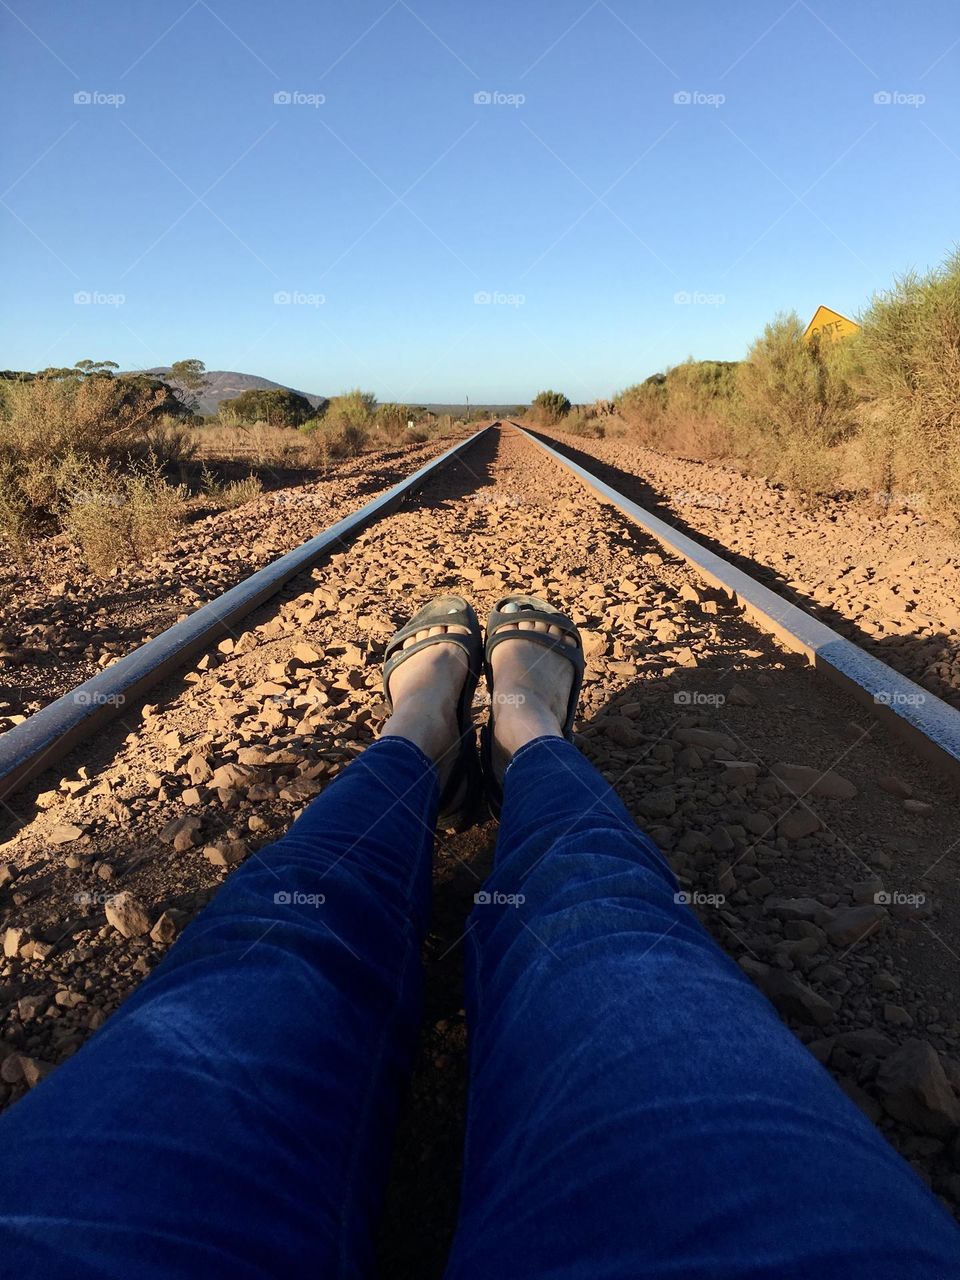 Ground perspective rural South Australia railway railroad tracks diminishing perspective Australian outback desert